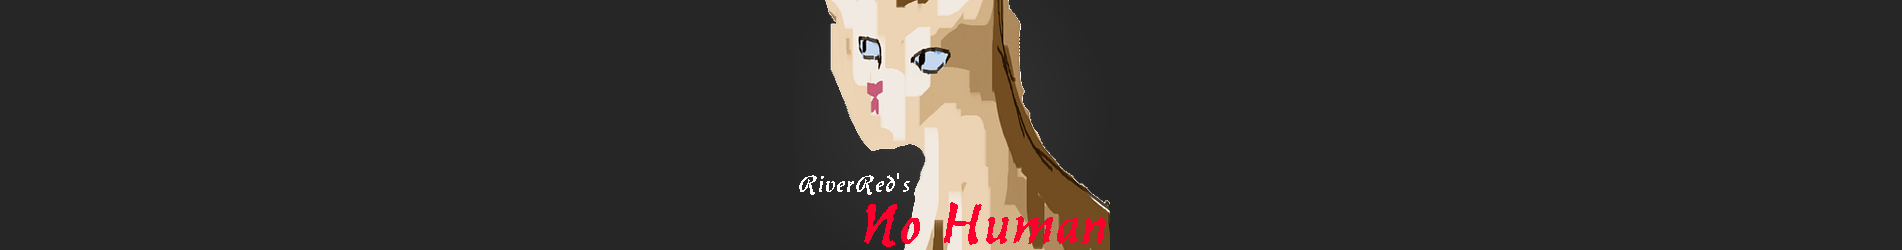 No Human